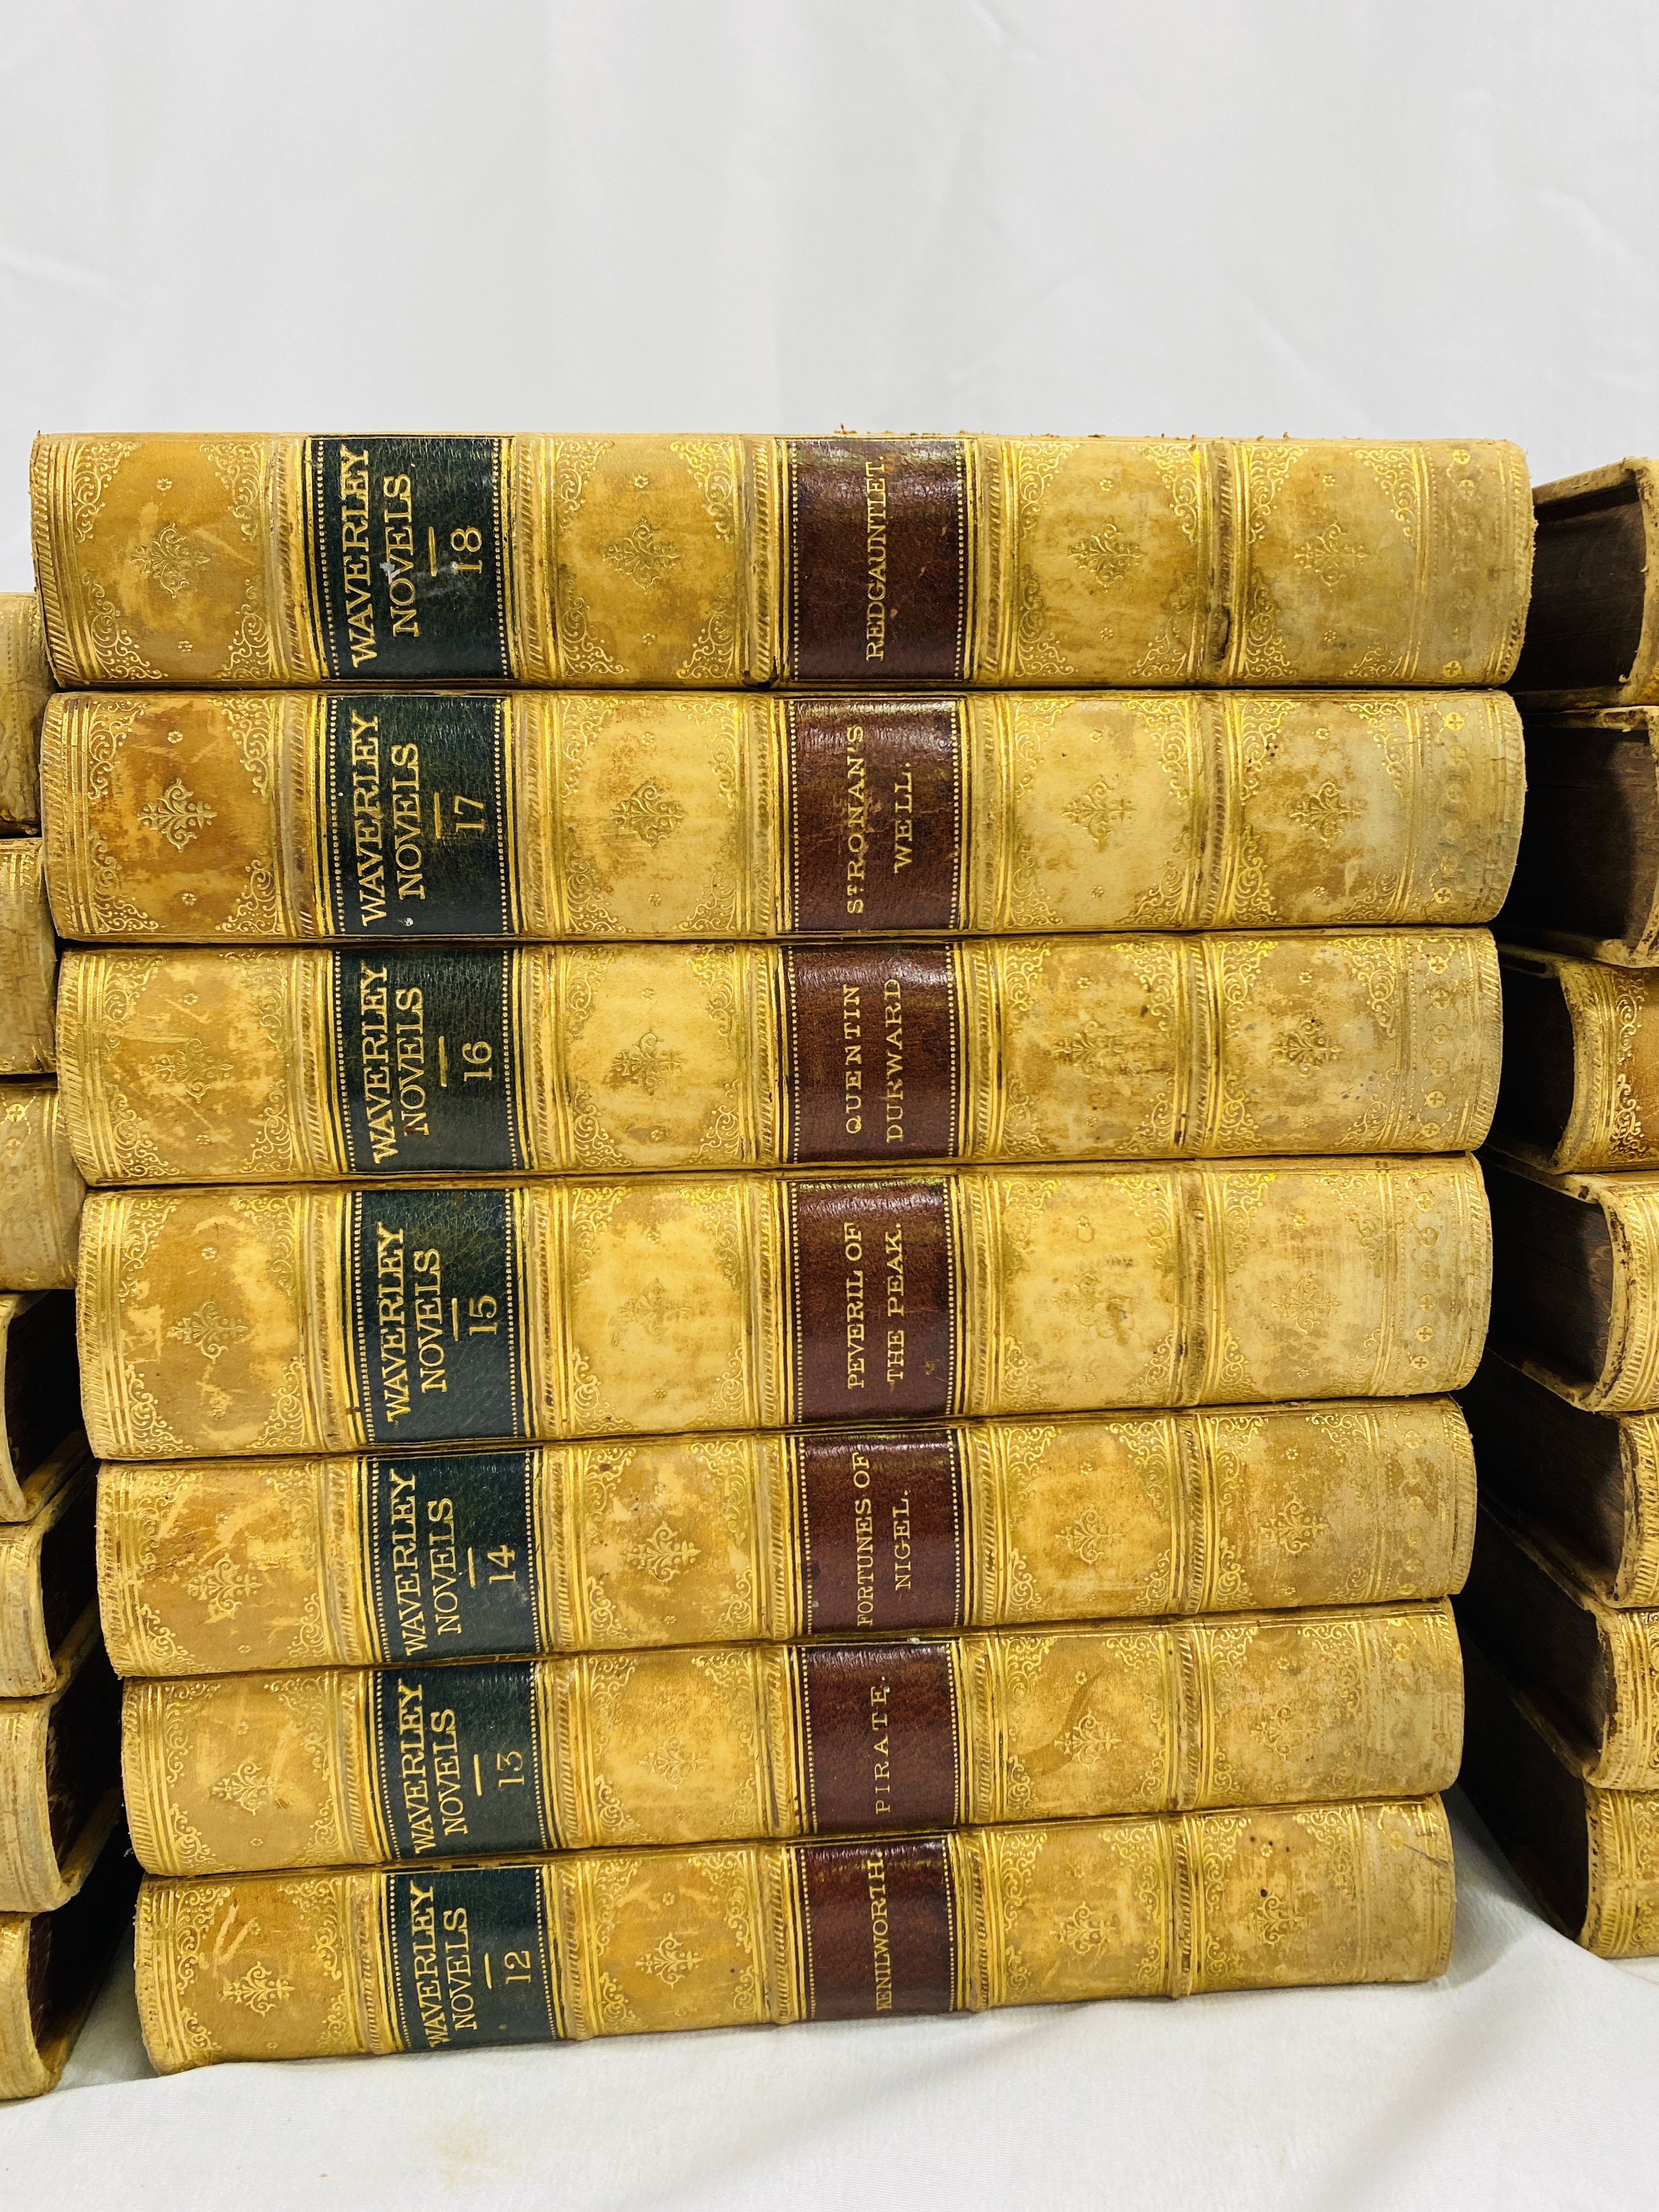 Waverley Novels, 1871 - Image 4 of 11